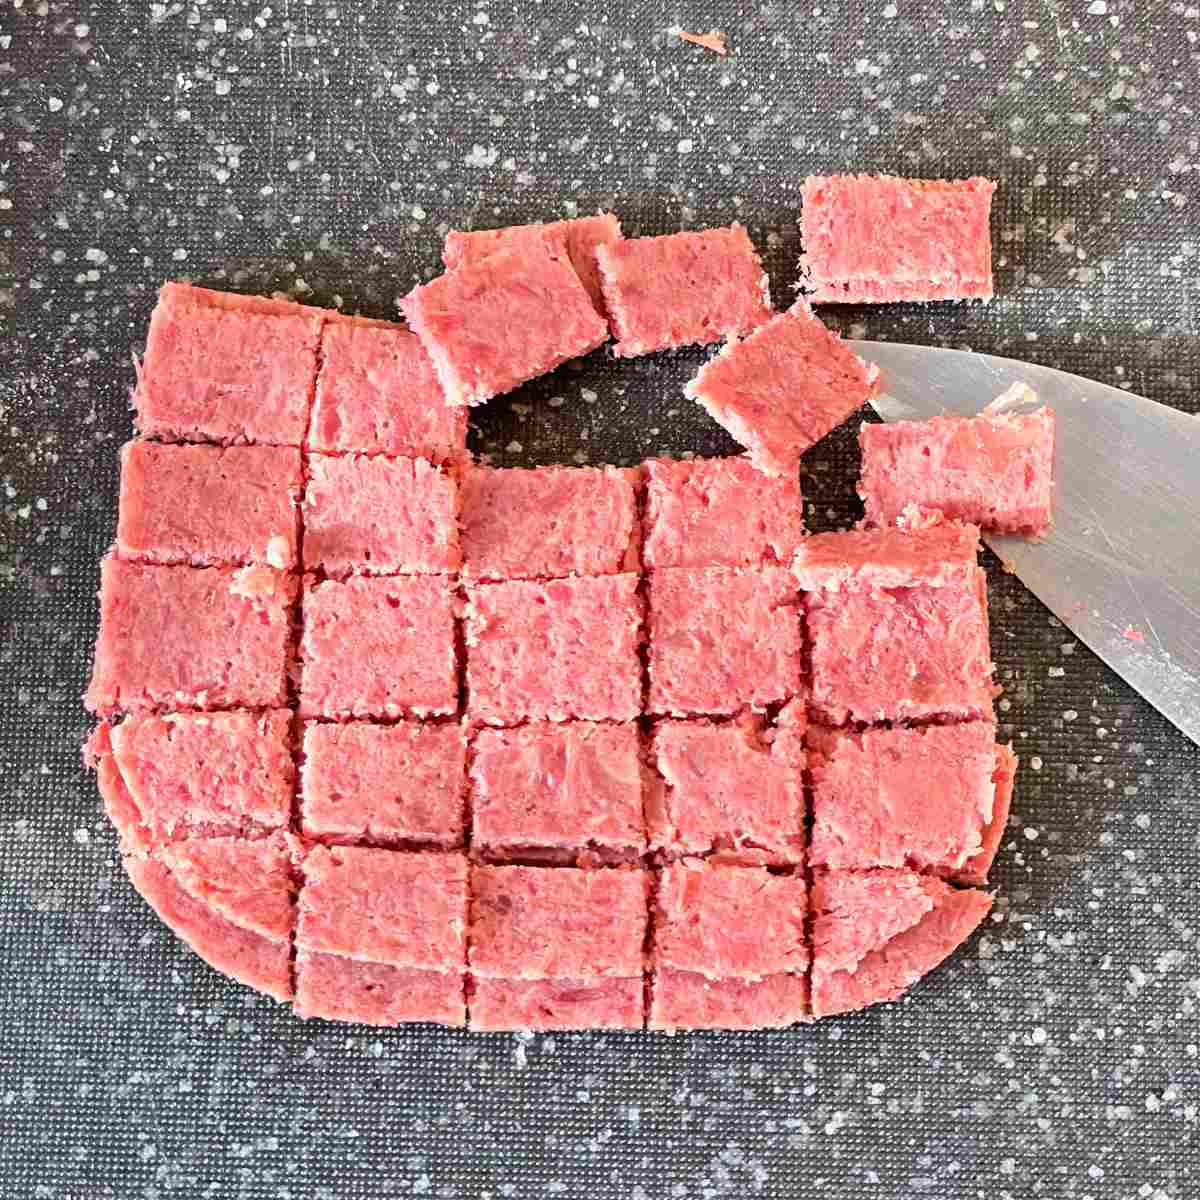 using sliced corned beef